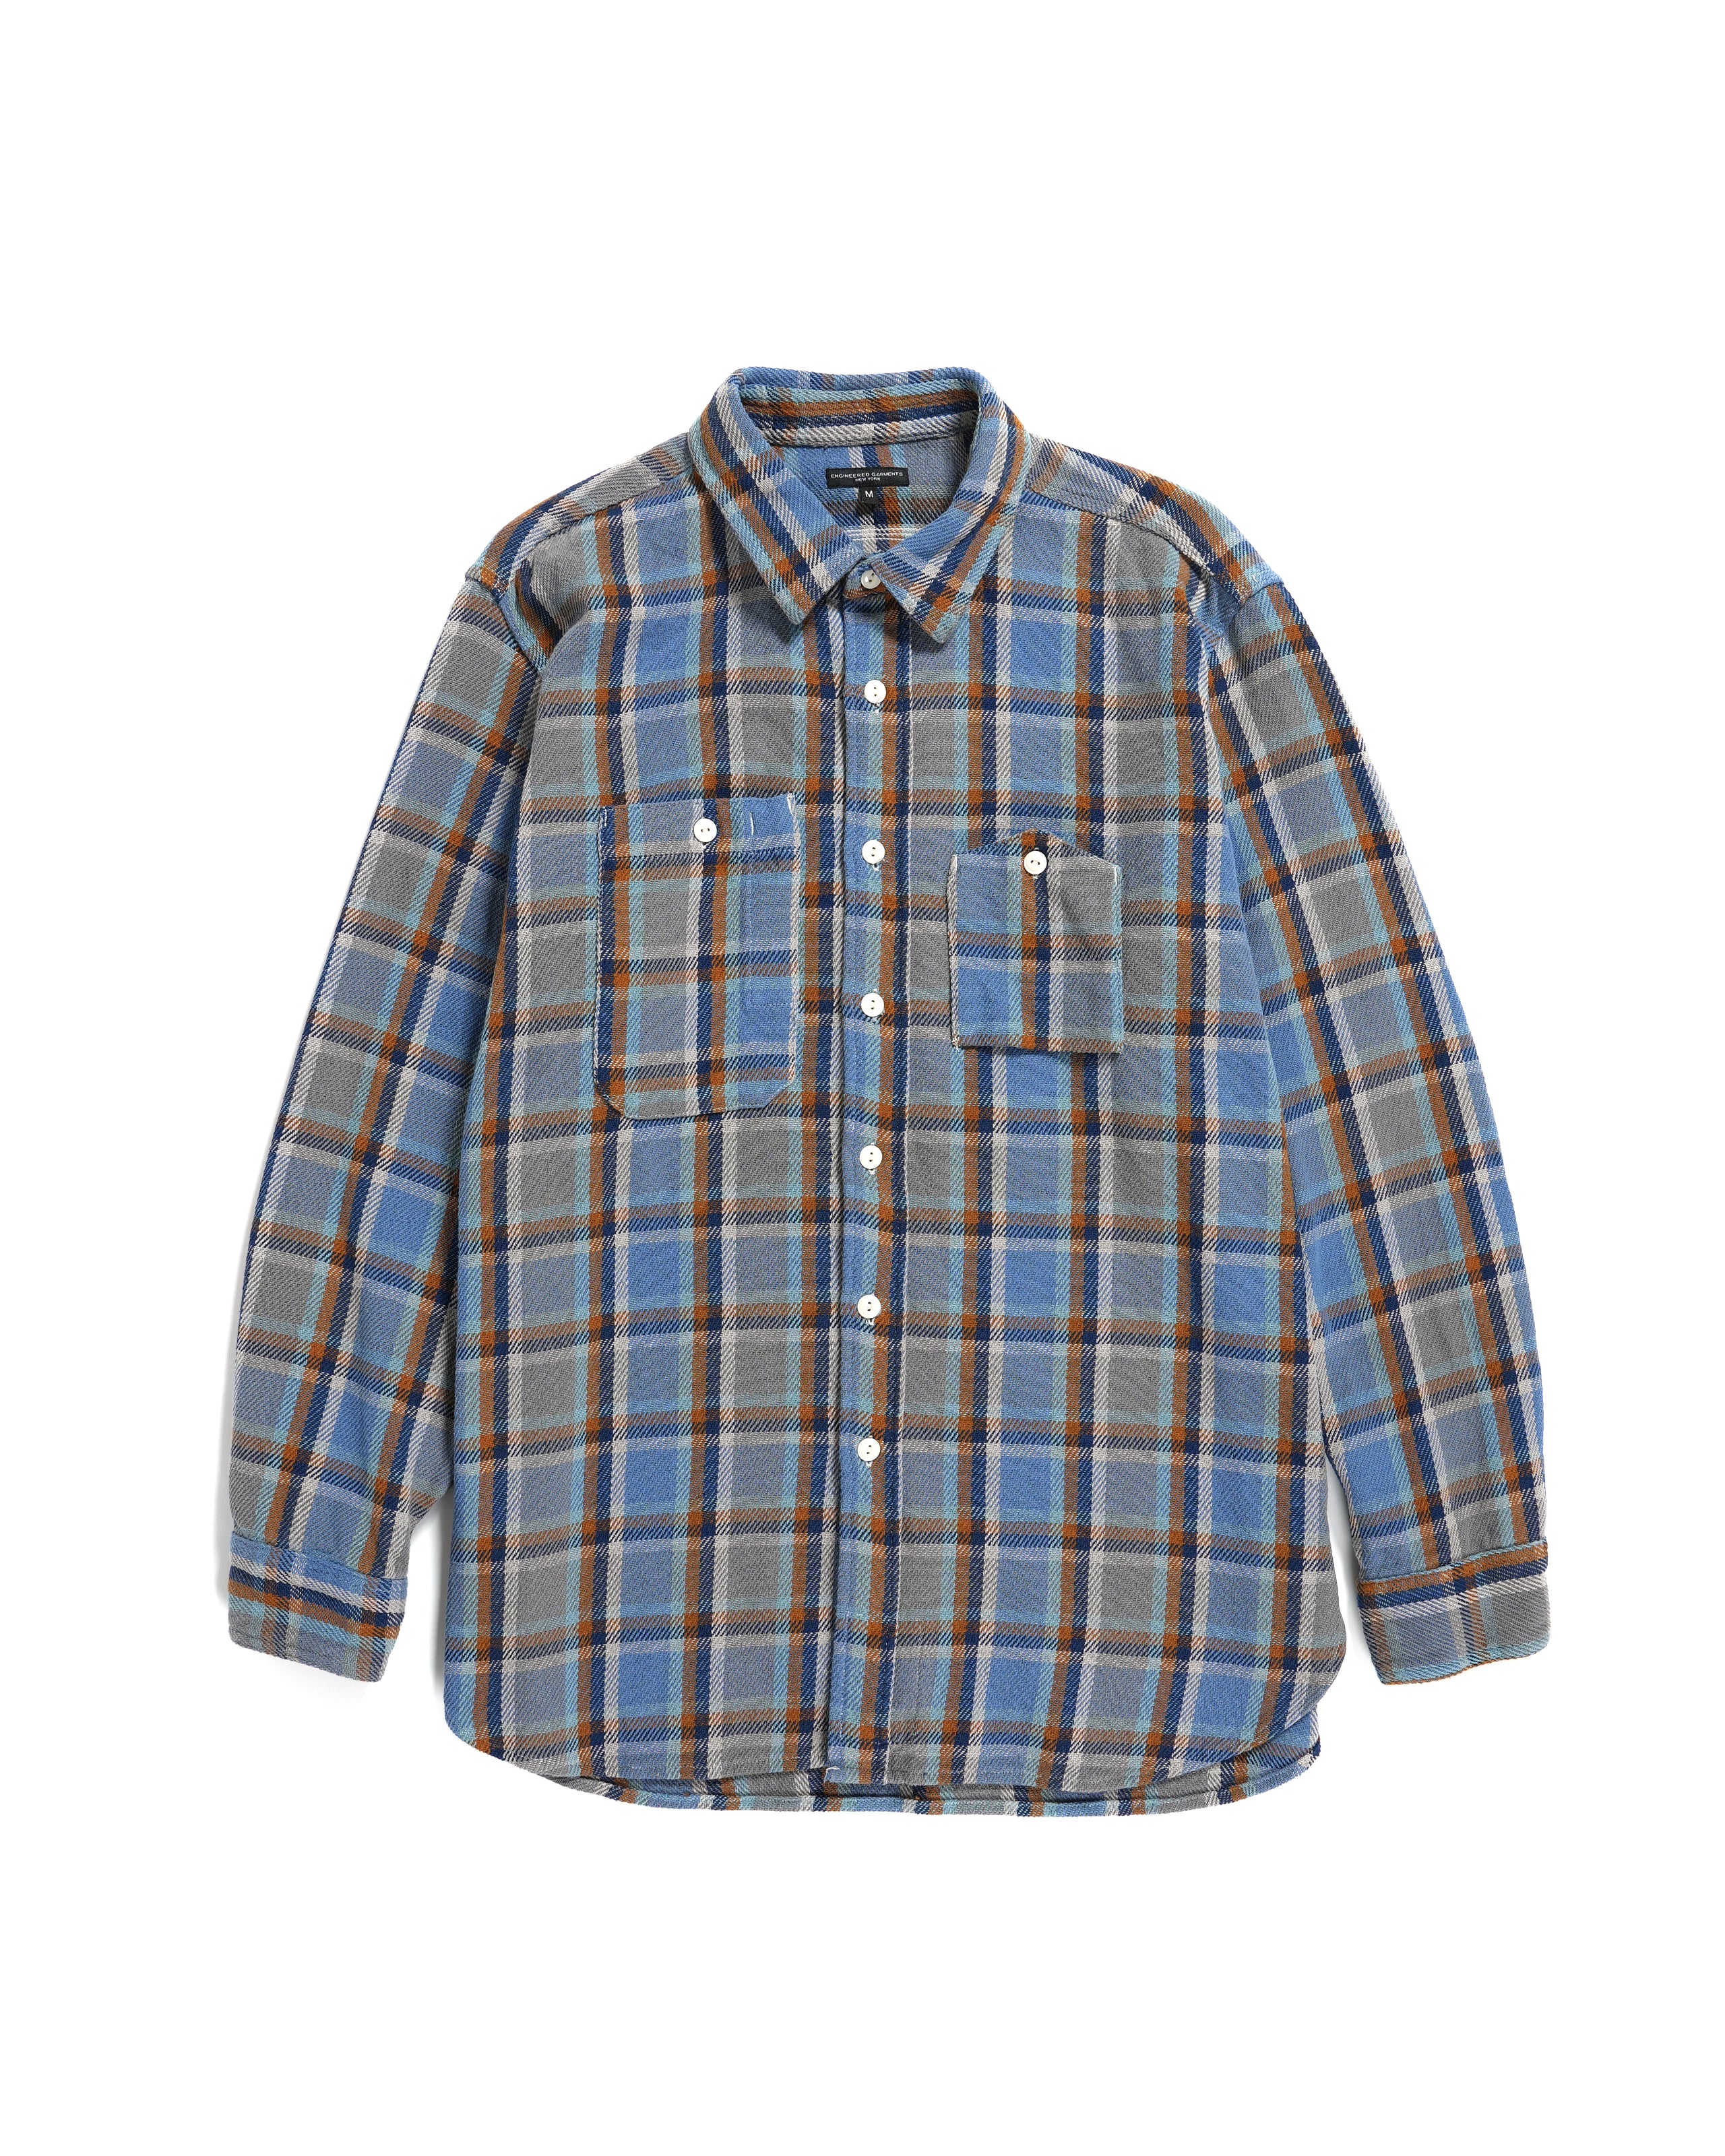 Work Shirt - Blue Cotton Heavy Twill Plaid